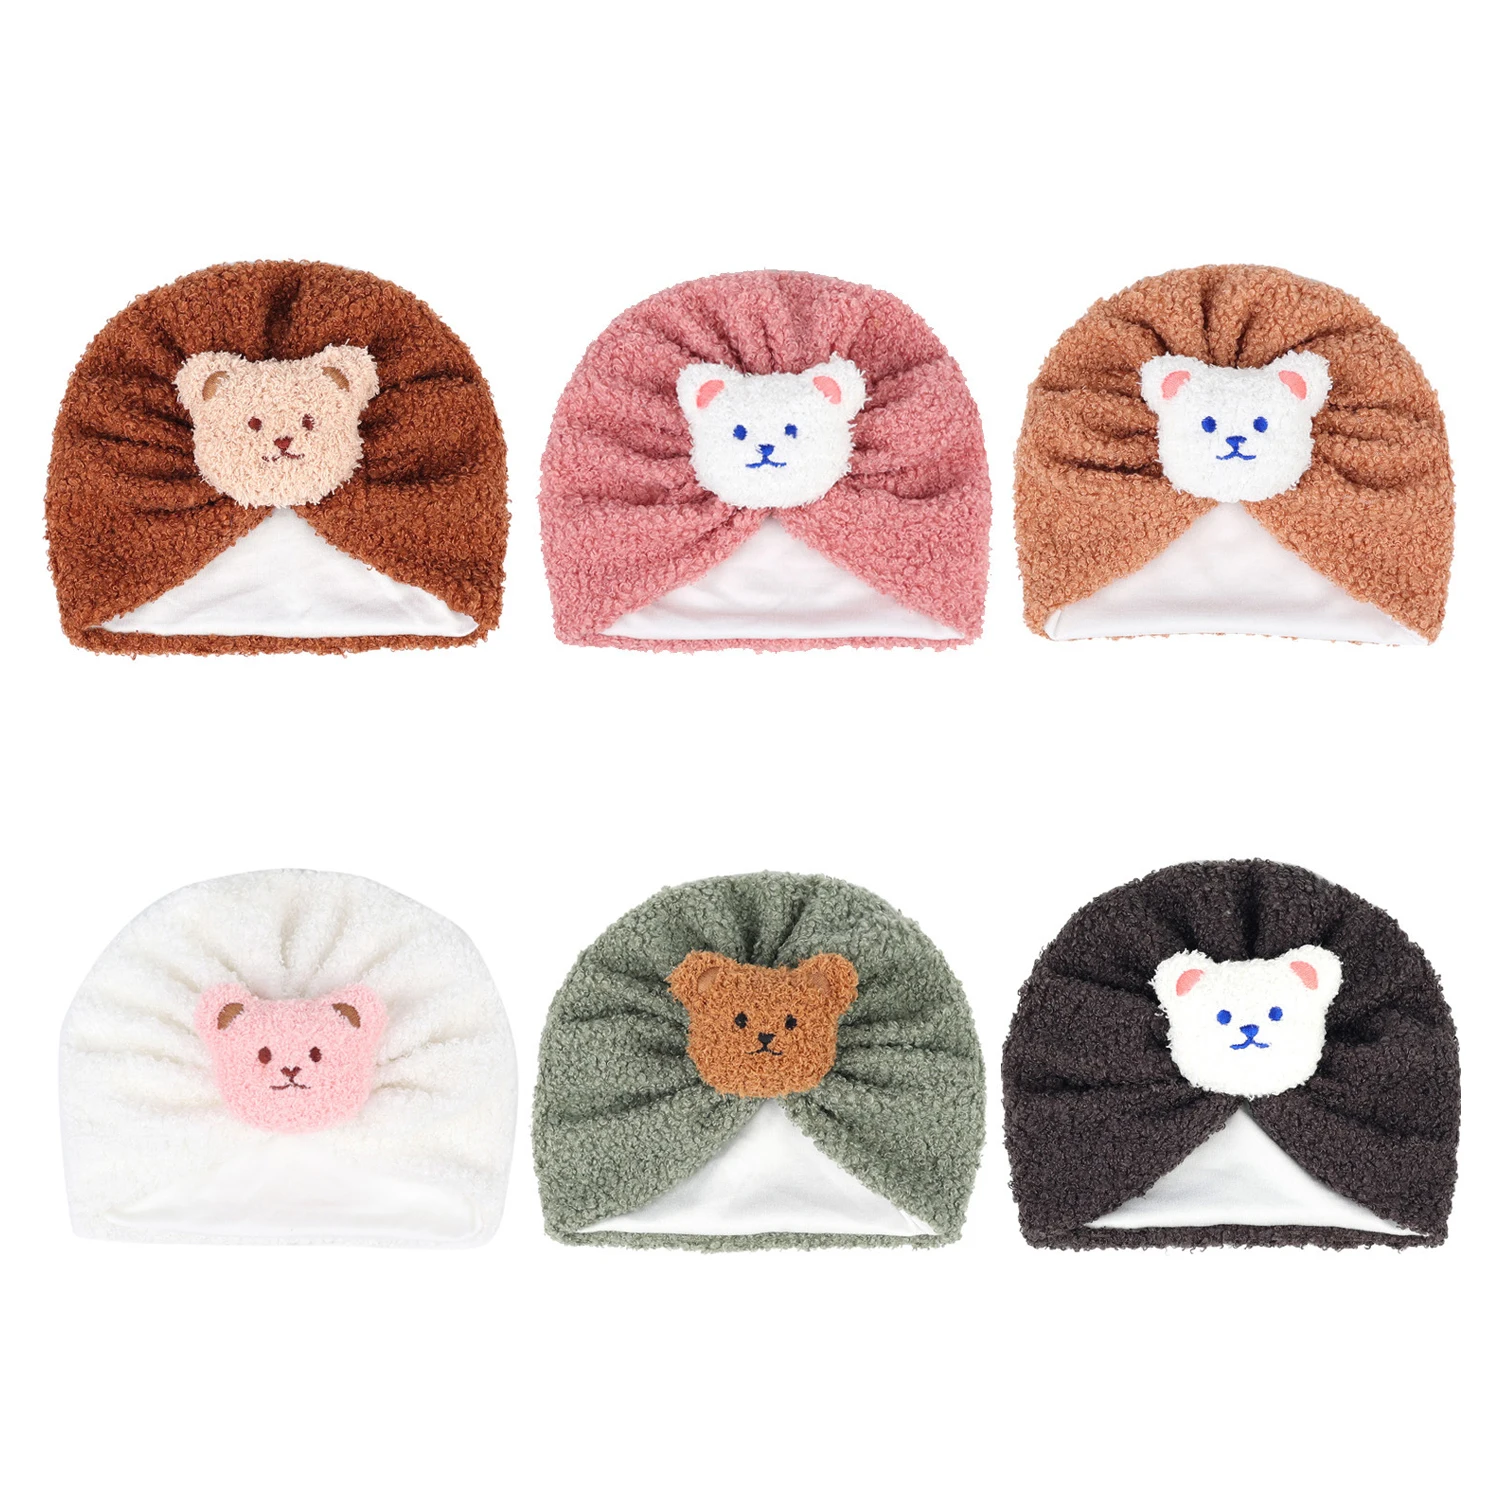 Baby Knotted Hats for Girls Beanie Cute Bear Headwrap Infant Turban Cap Coral Fleece Newborn Winter Warm Bonnet Kids Caps 0-6M